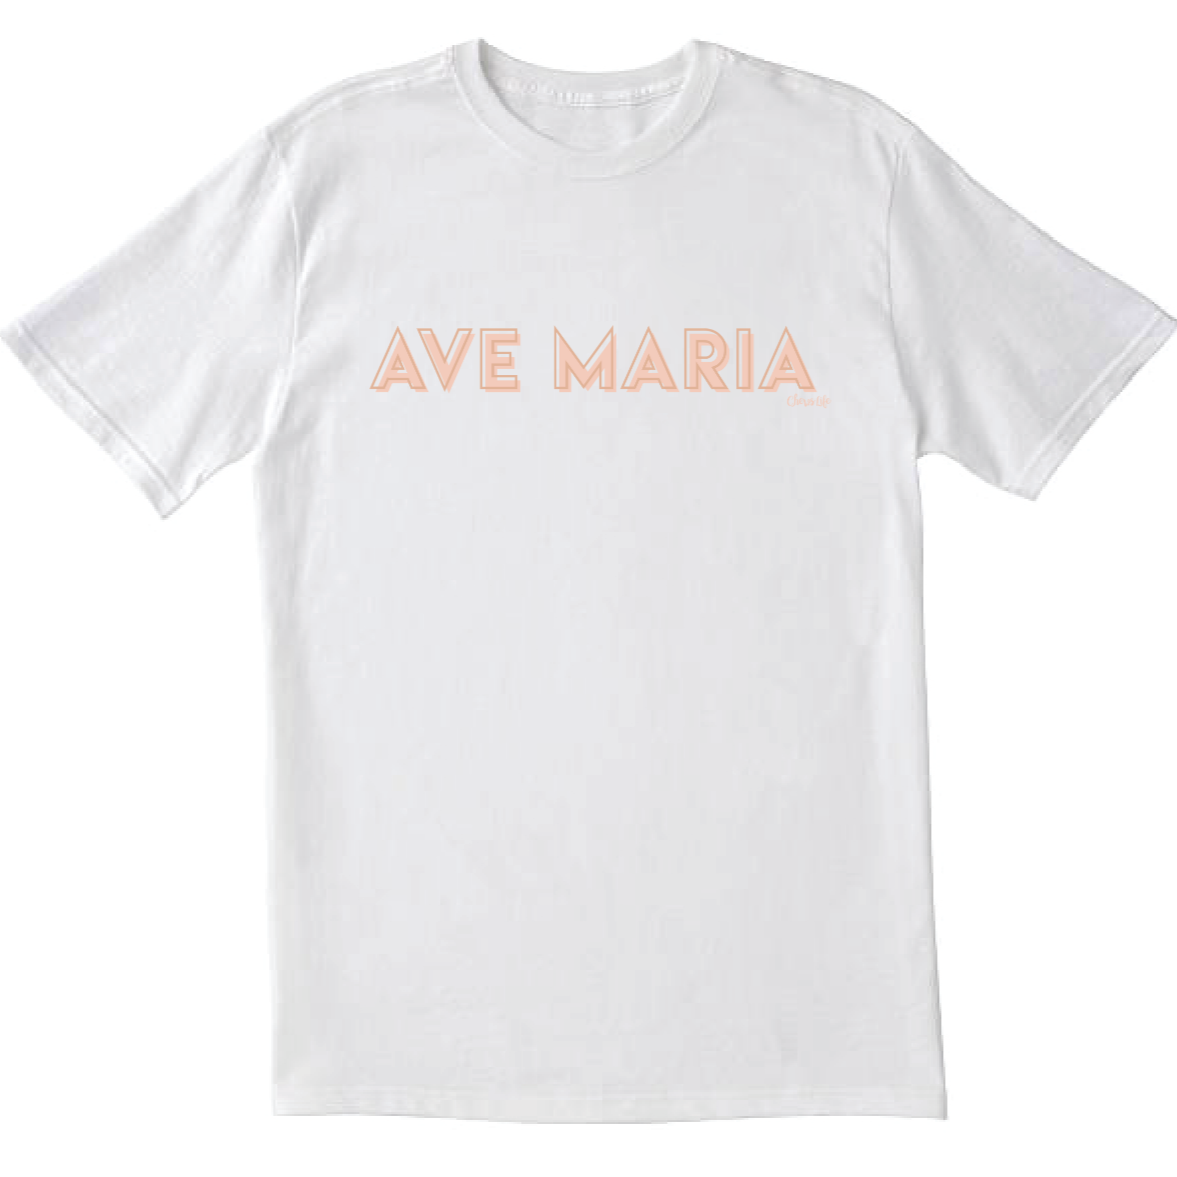 Ave Maria Cotton Unisex T-Shirt | White, Navy, Black, or Gray